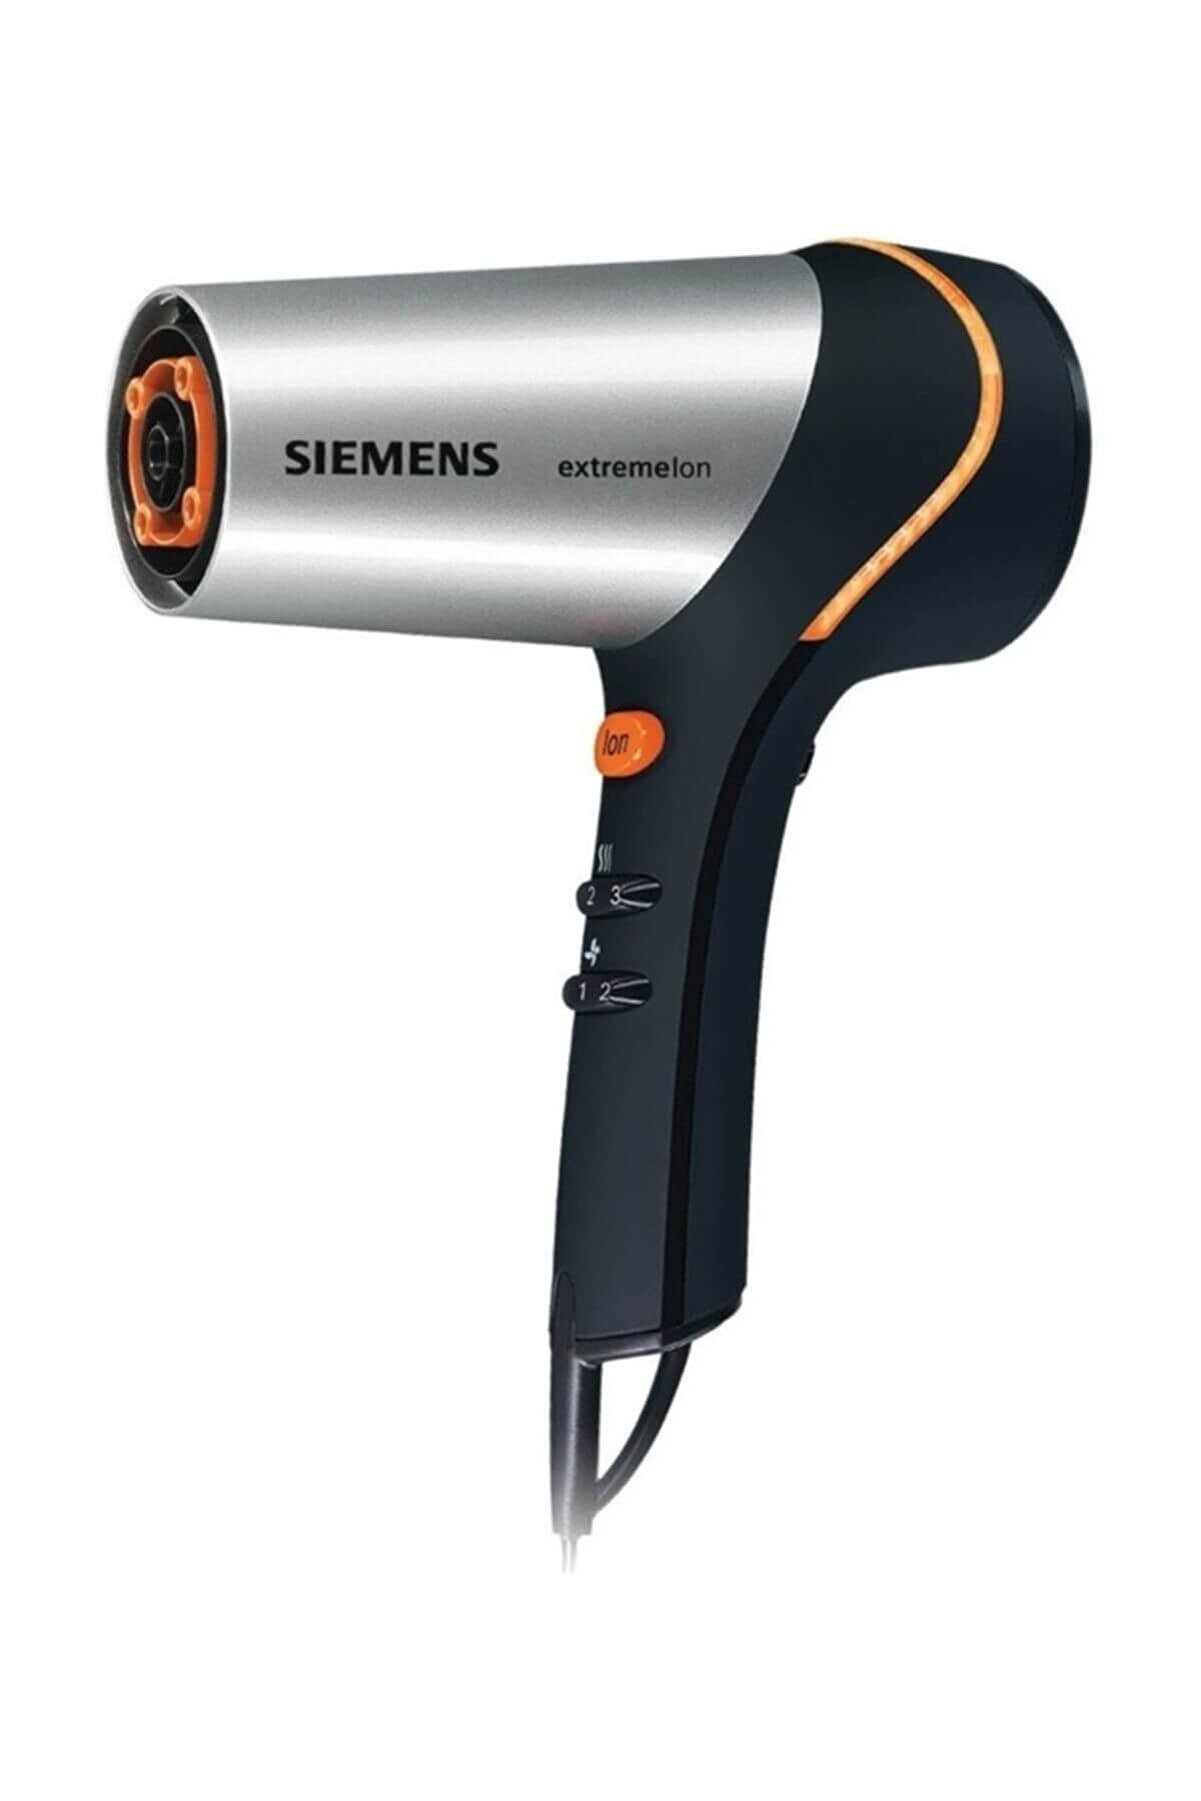 Siemens Extremeıon Serisi 2000 W Iyonizerli Difüzörlü Saç Kurutma Makinesi Ph5767d